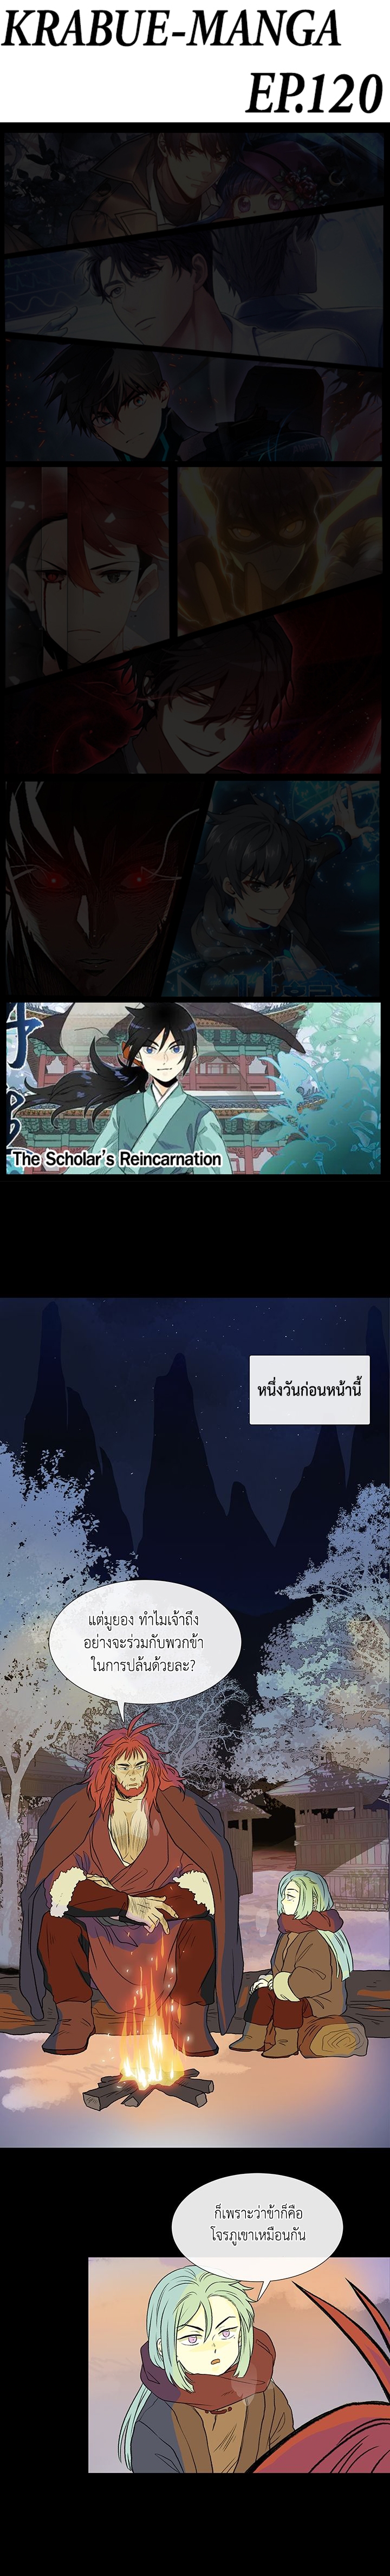 The Scholar’s Reincarnation 120 (1)